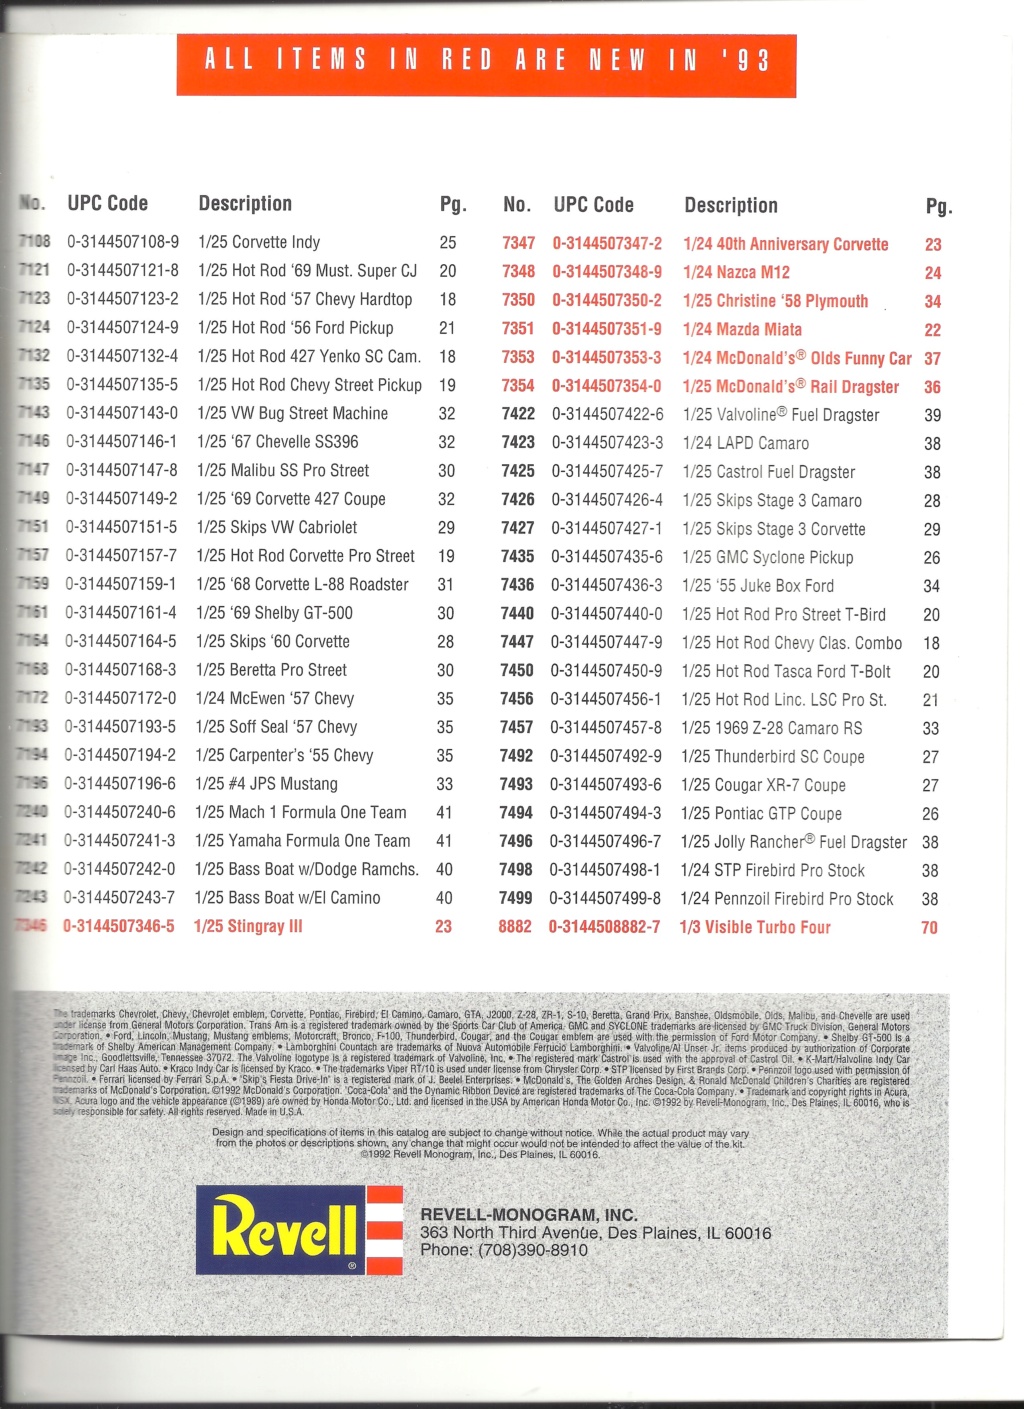 [REVELL US 1993] Catalogue 1993 Revel762